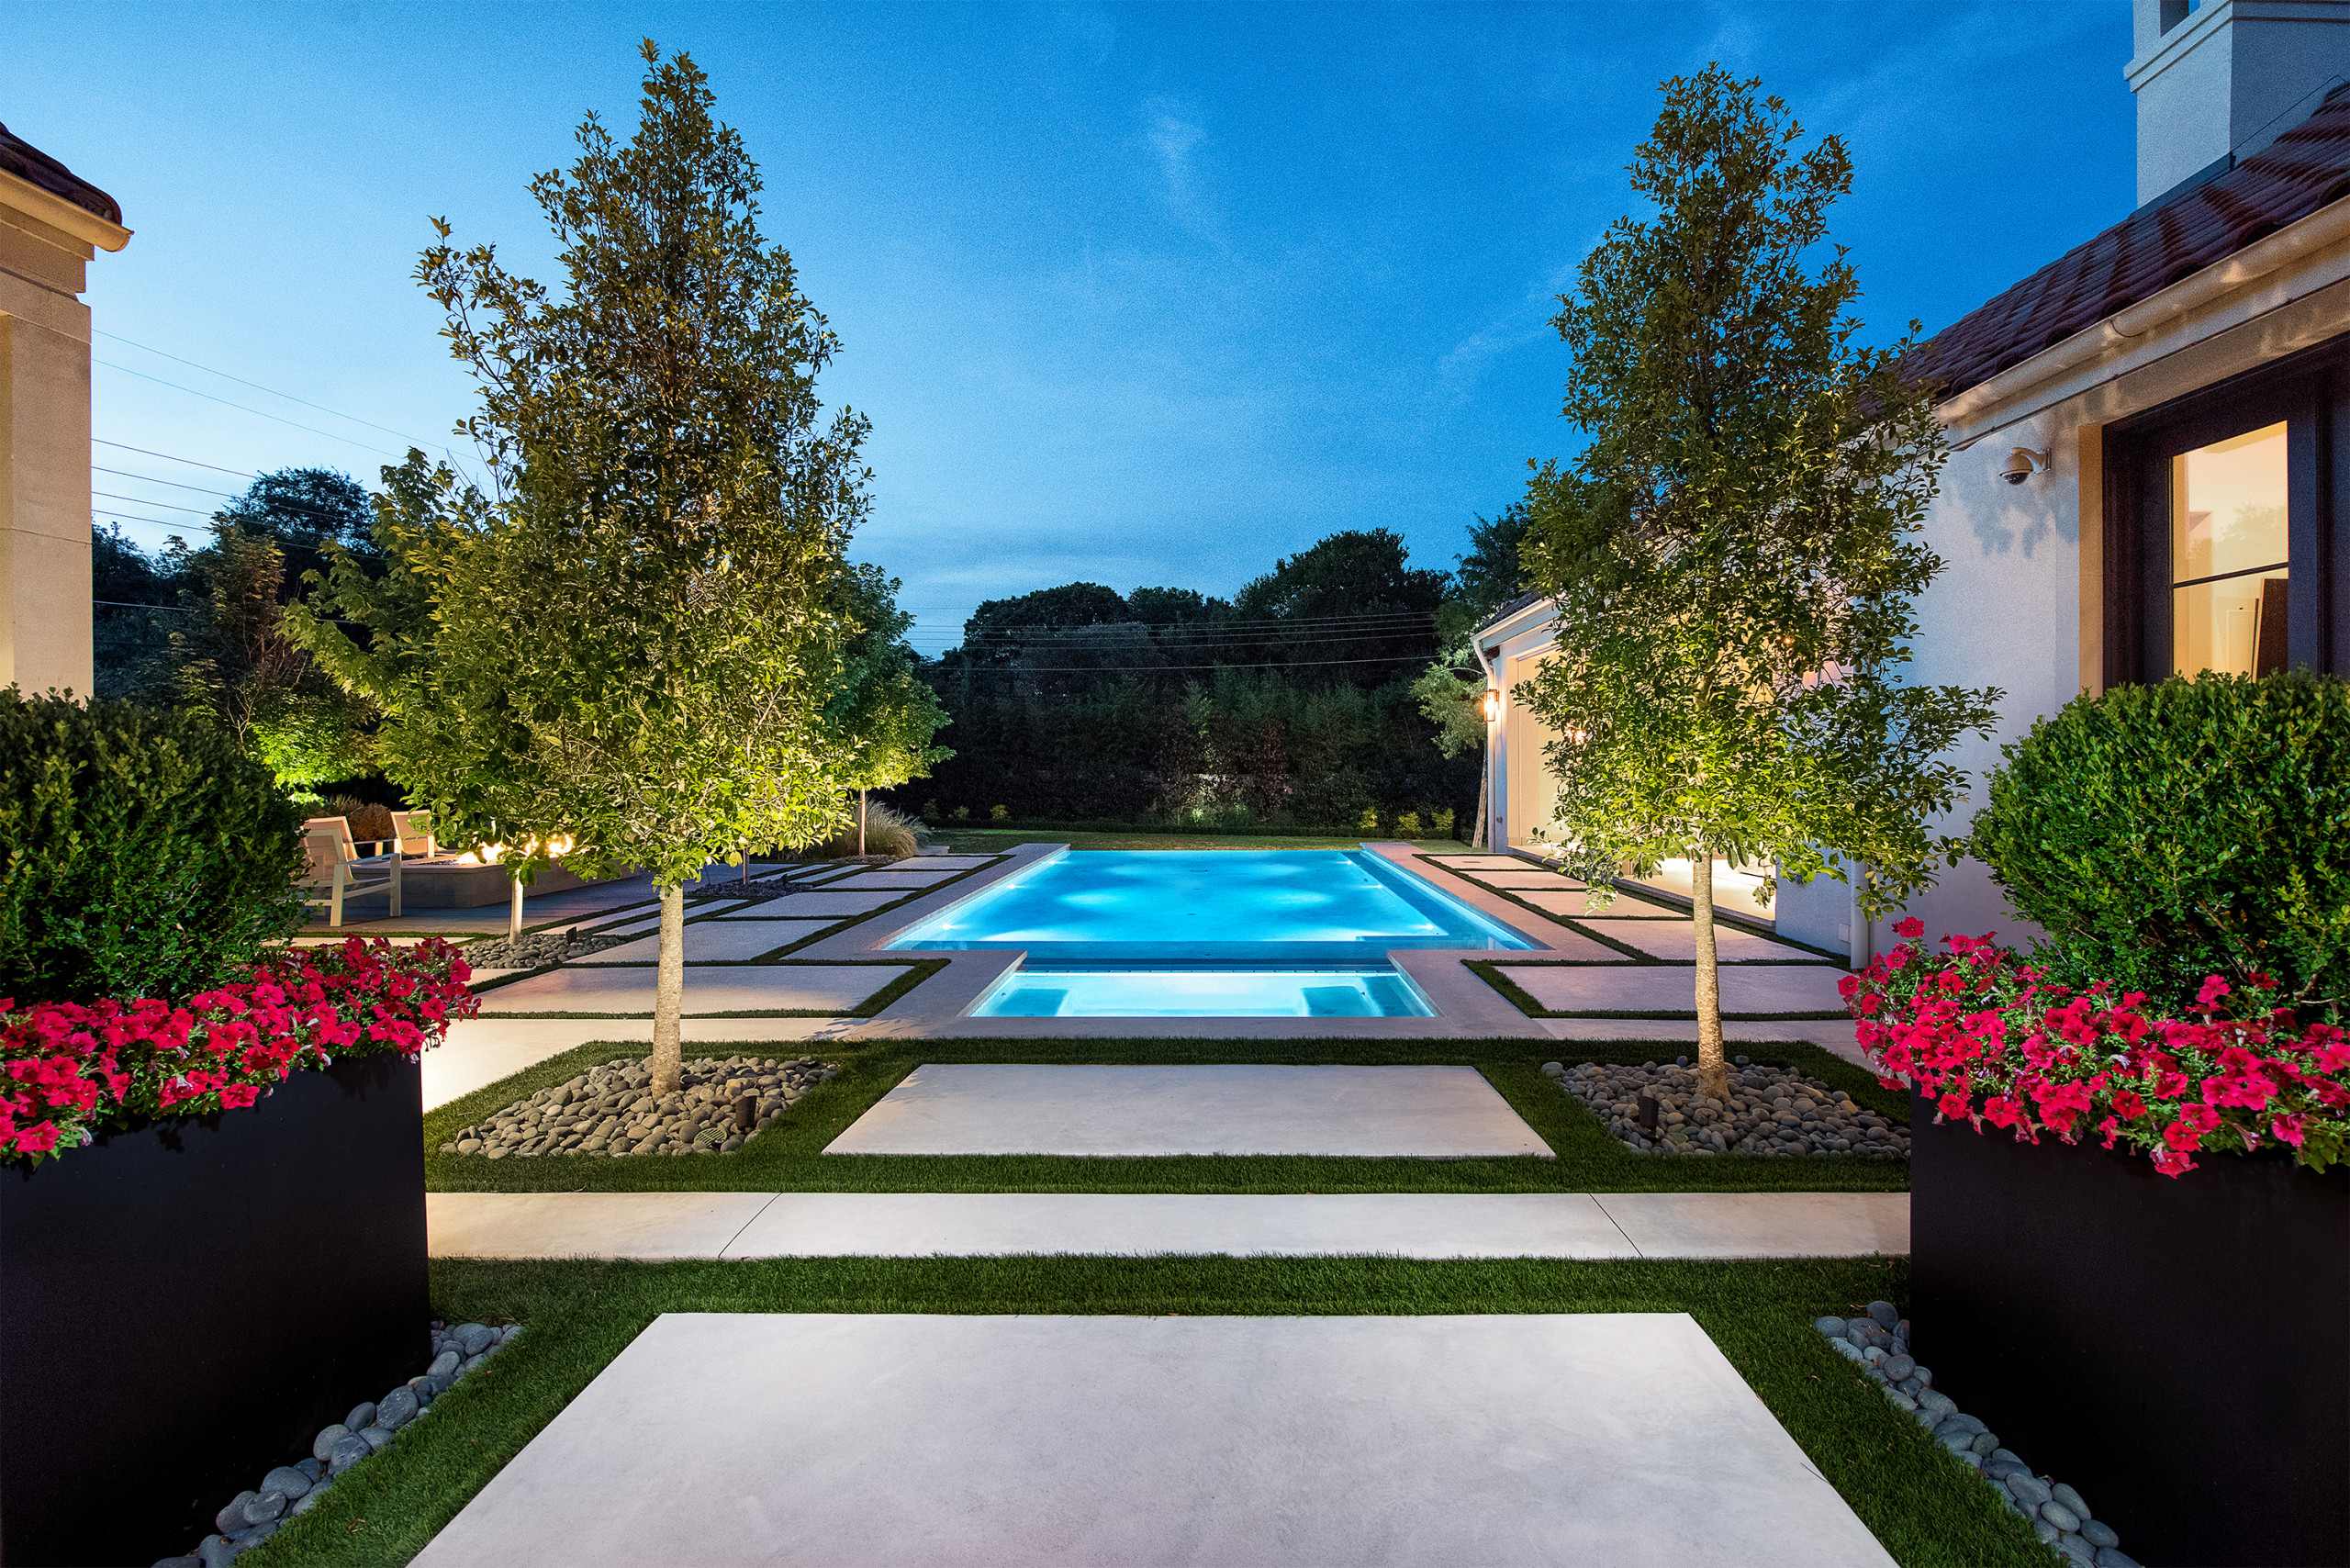 Over 2,600+ Beautiful Pool Design Ideas You